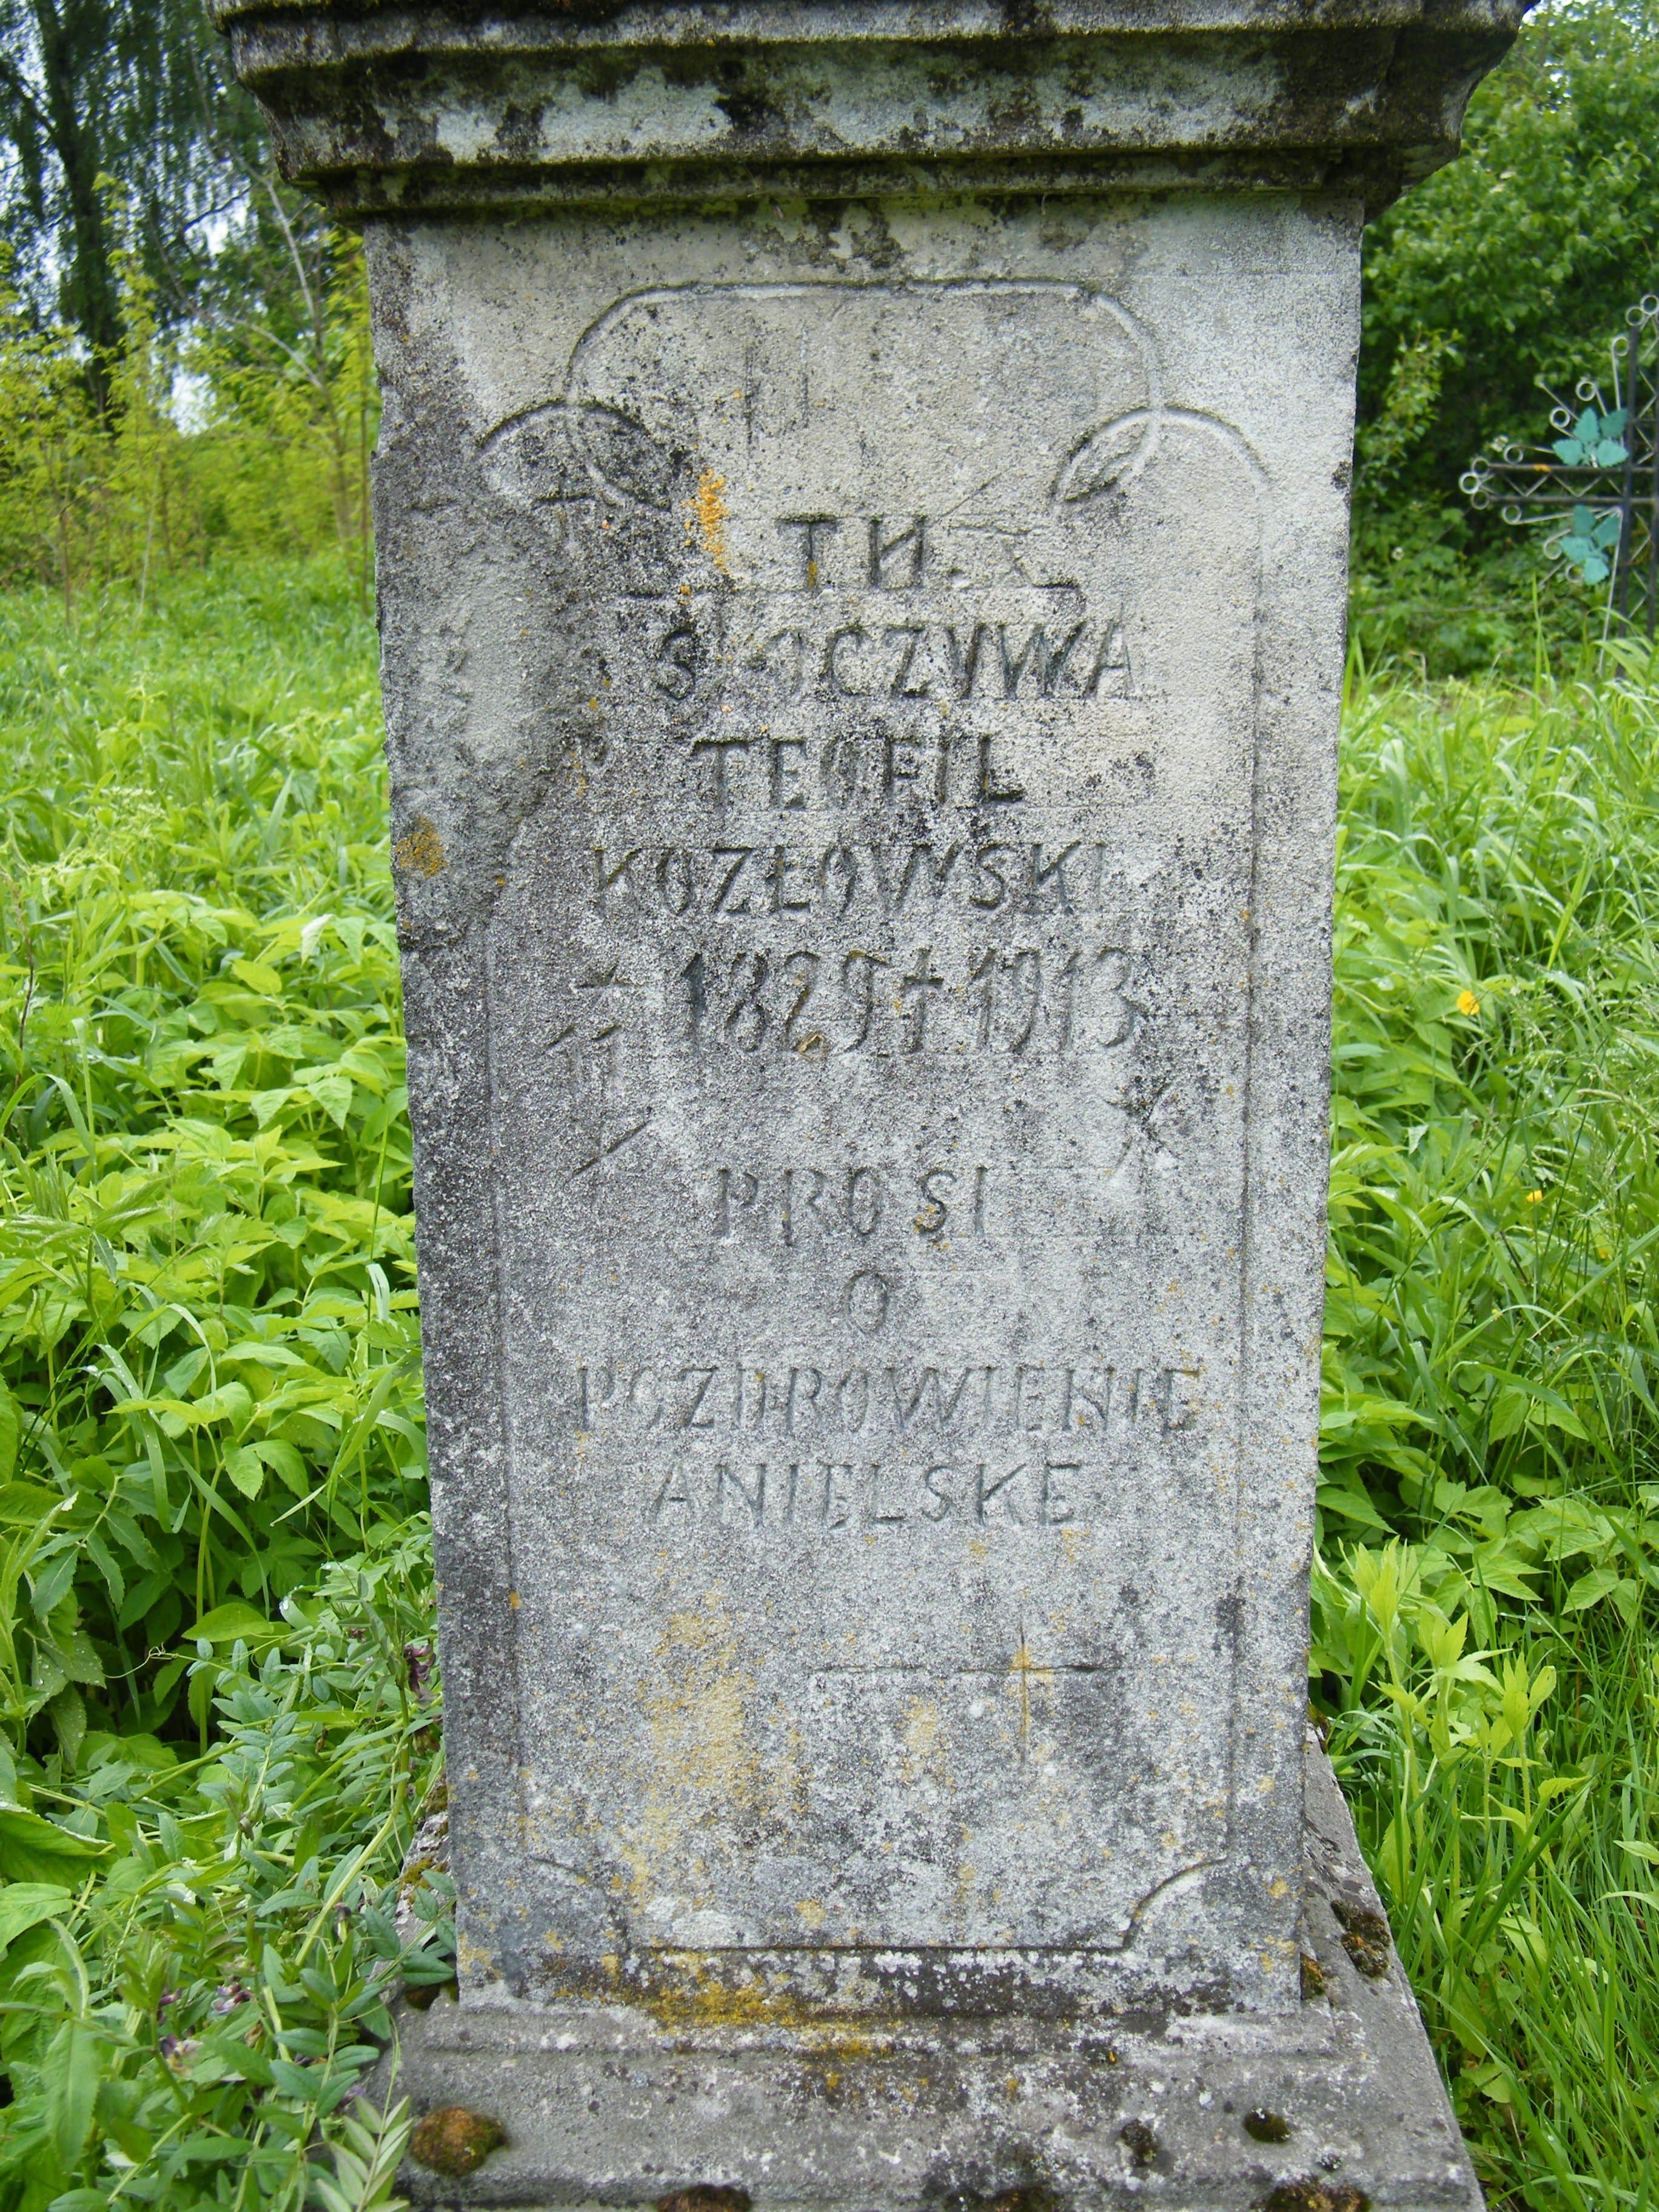 Inscription from the gravestone of Teofil Kozlowski. Cemetery in Pleszkowce